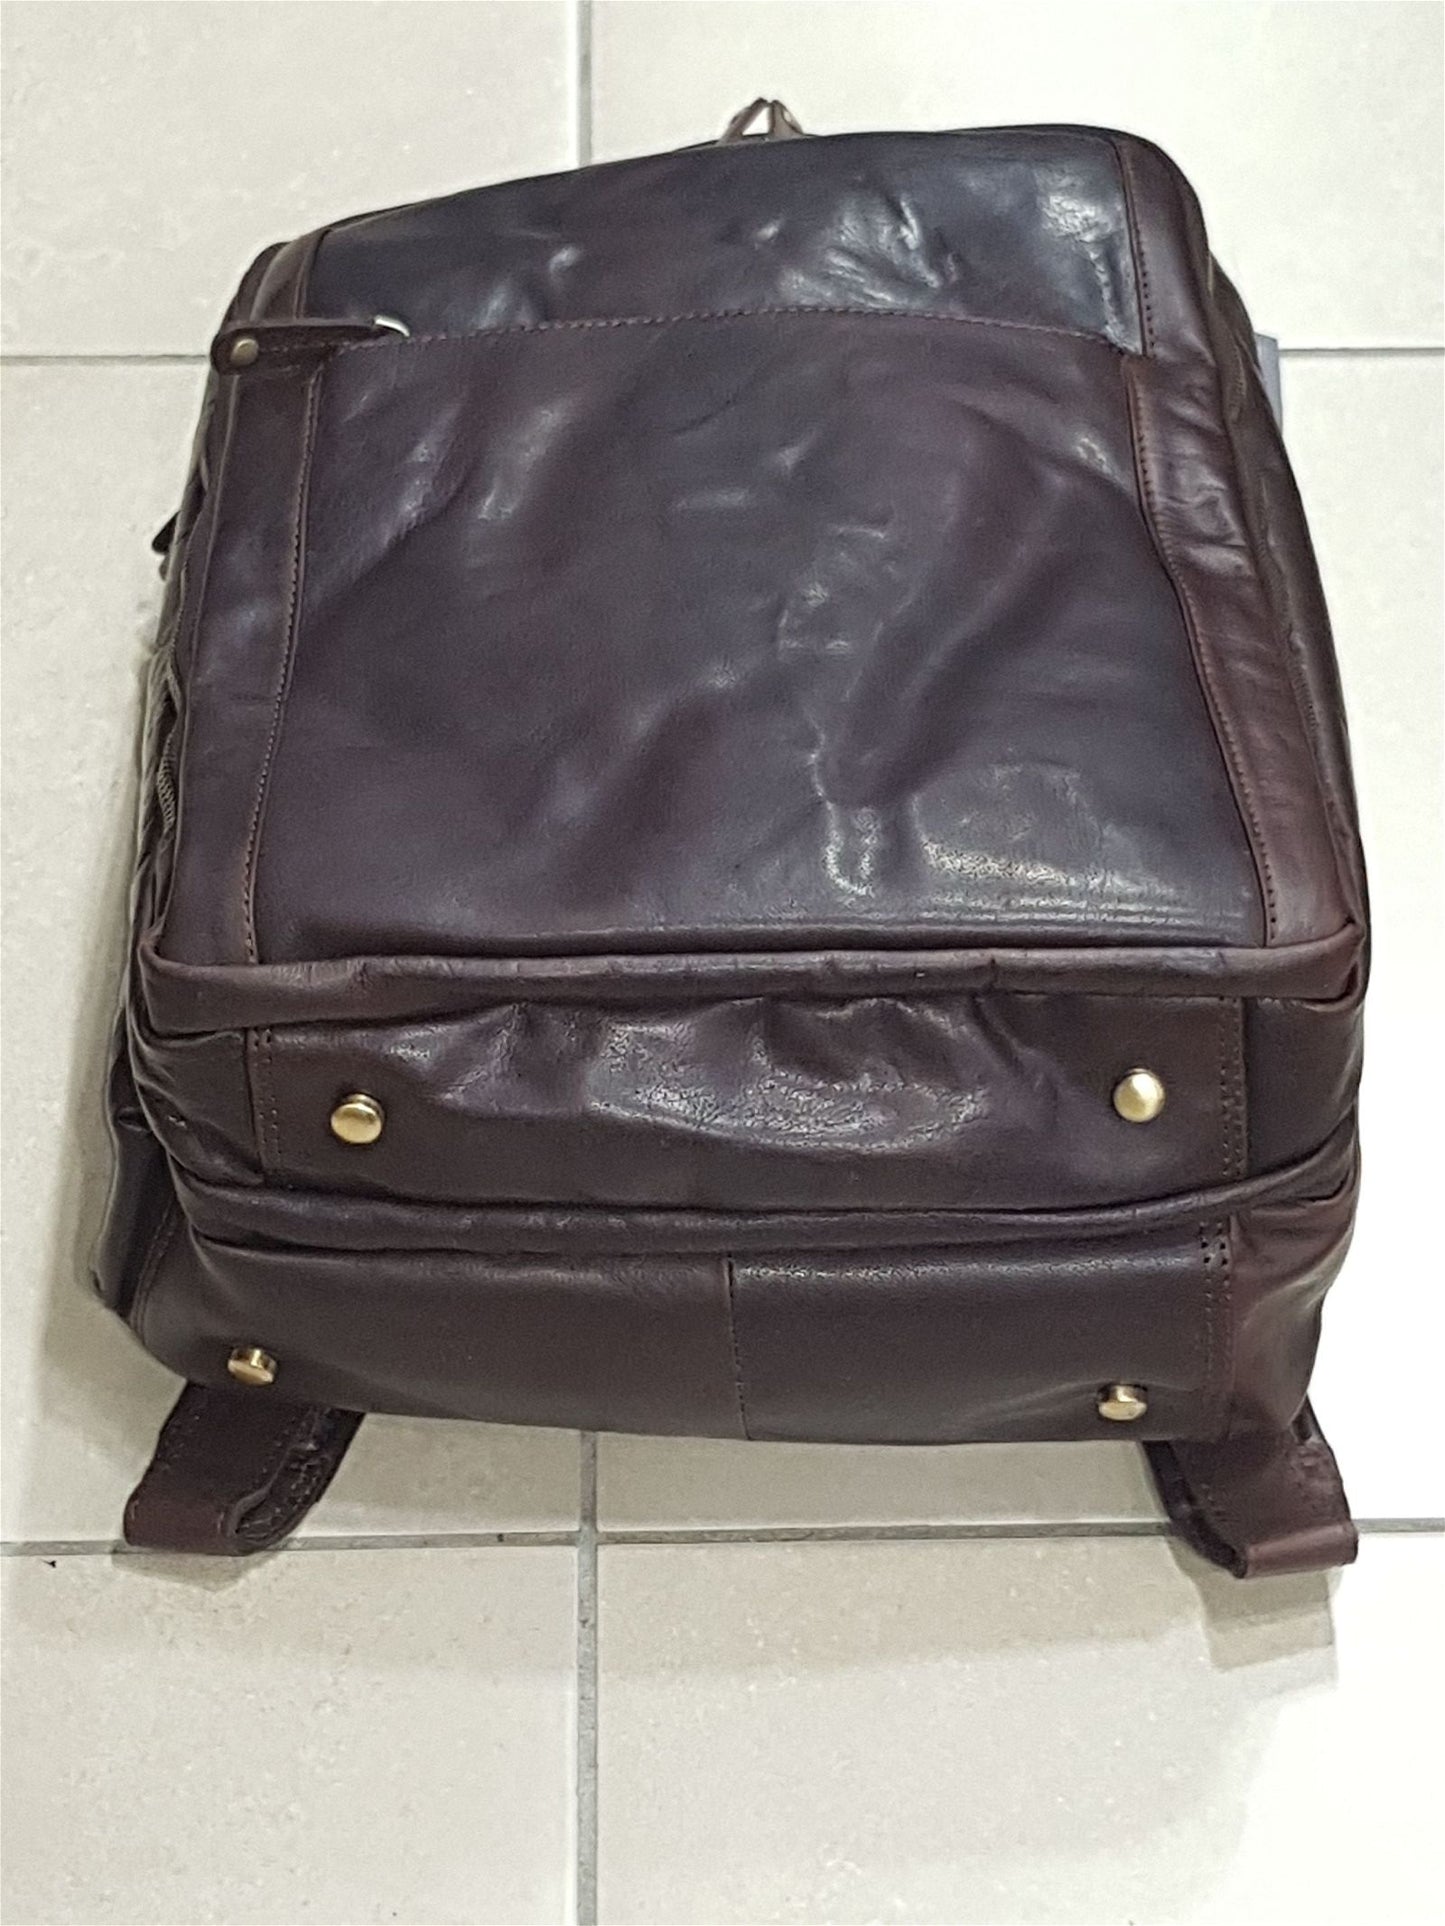 Oran - Mike Large Leather Laptop Backpack - rainbowbags